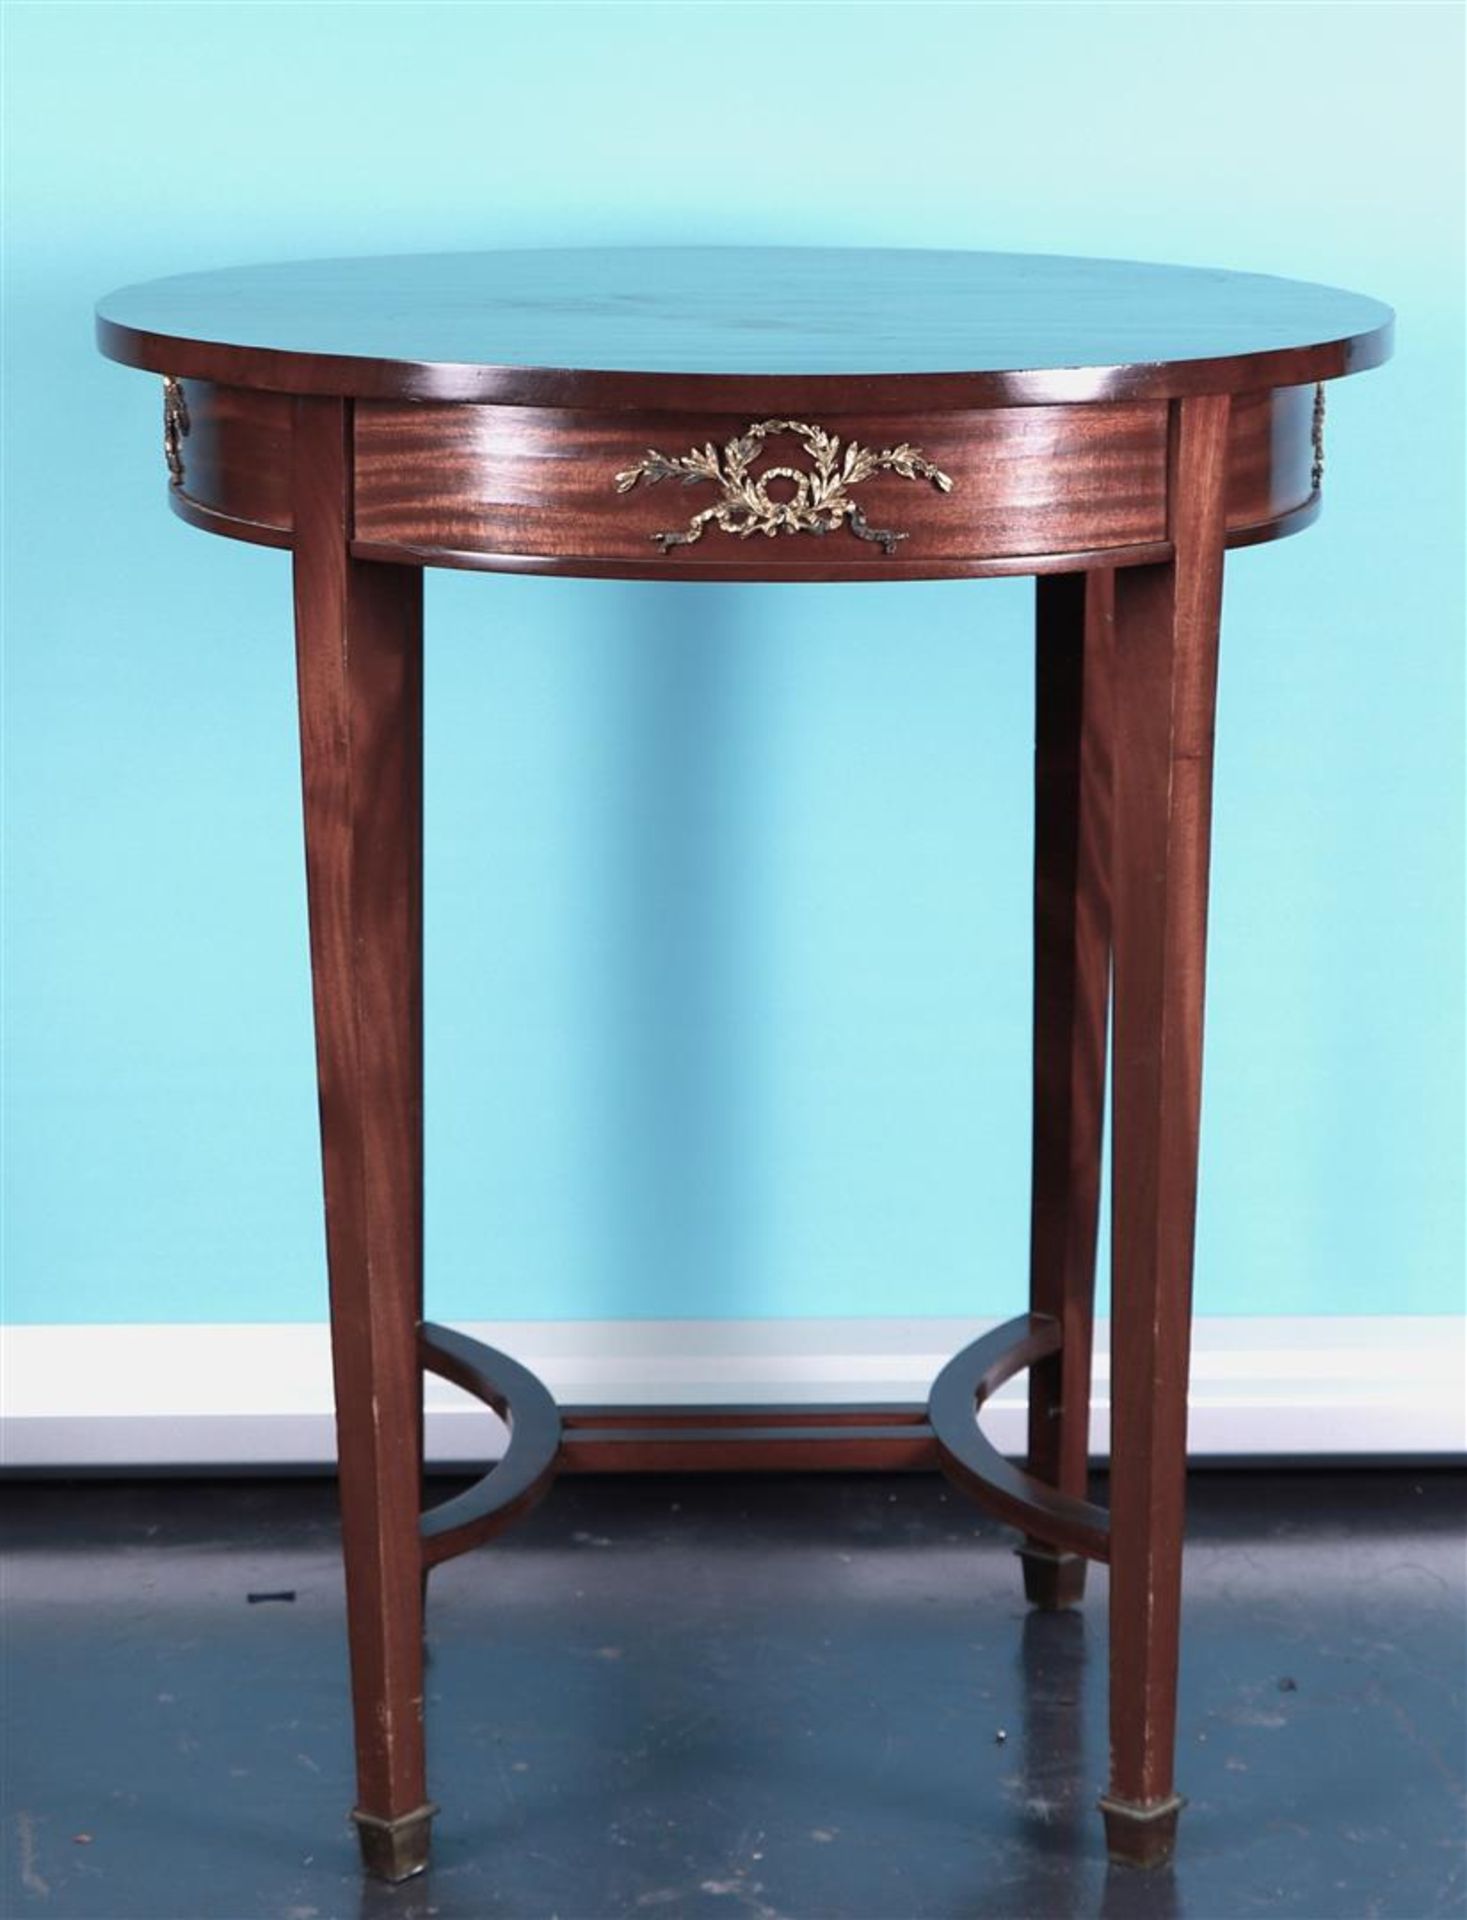 A Napoleon III-style table with brass garlands and legs. Origin: G. van Nijnatten & Son, Den Bosch.
